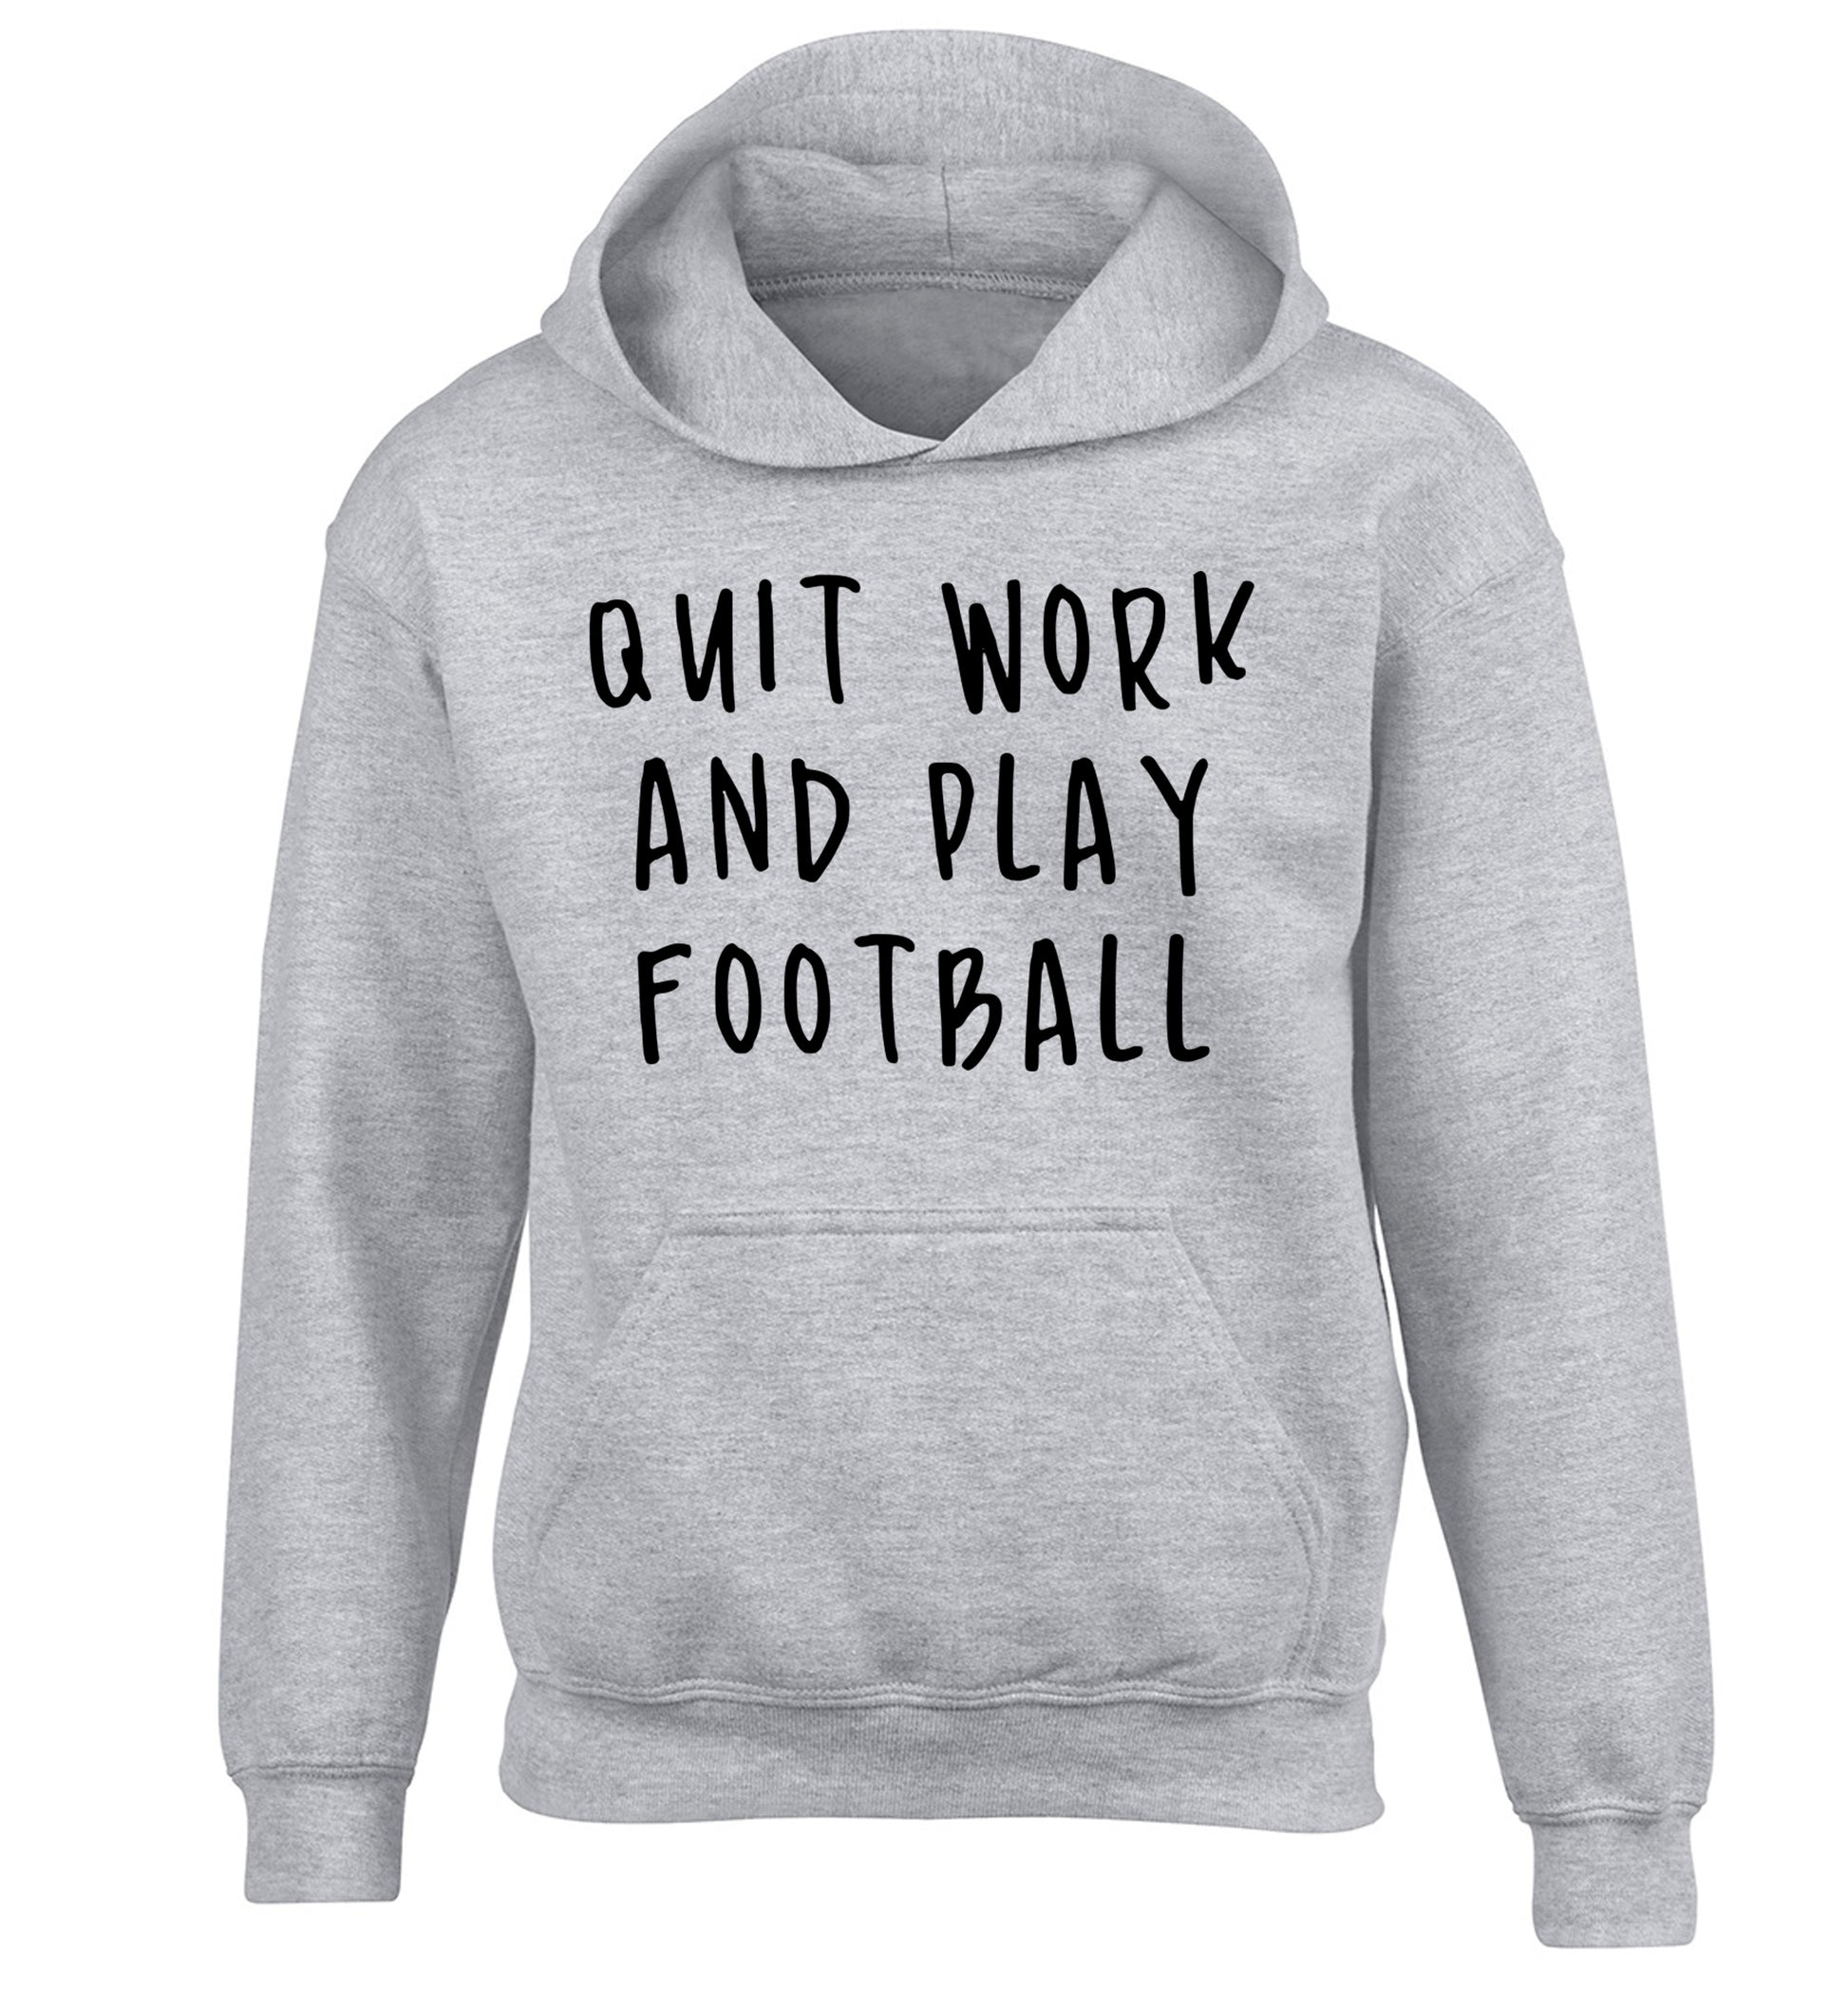 Quit work play football children's grey hoodie 12-14 Years